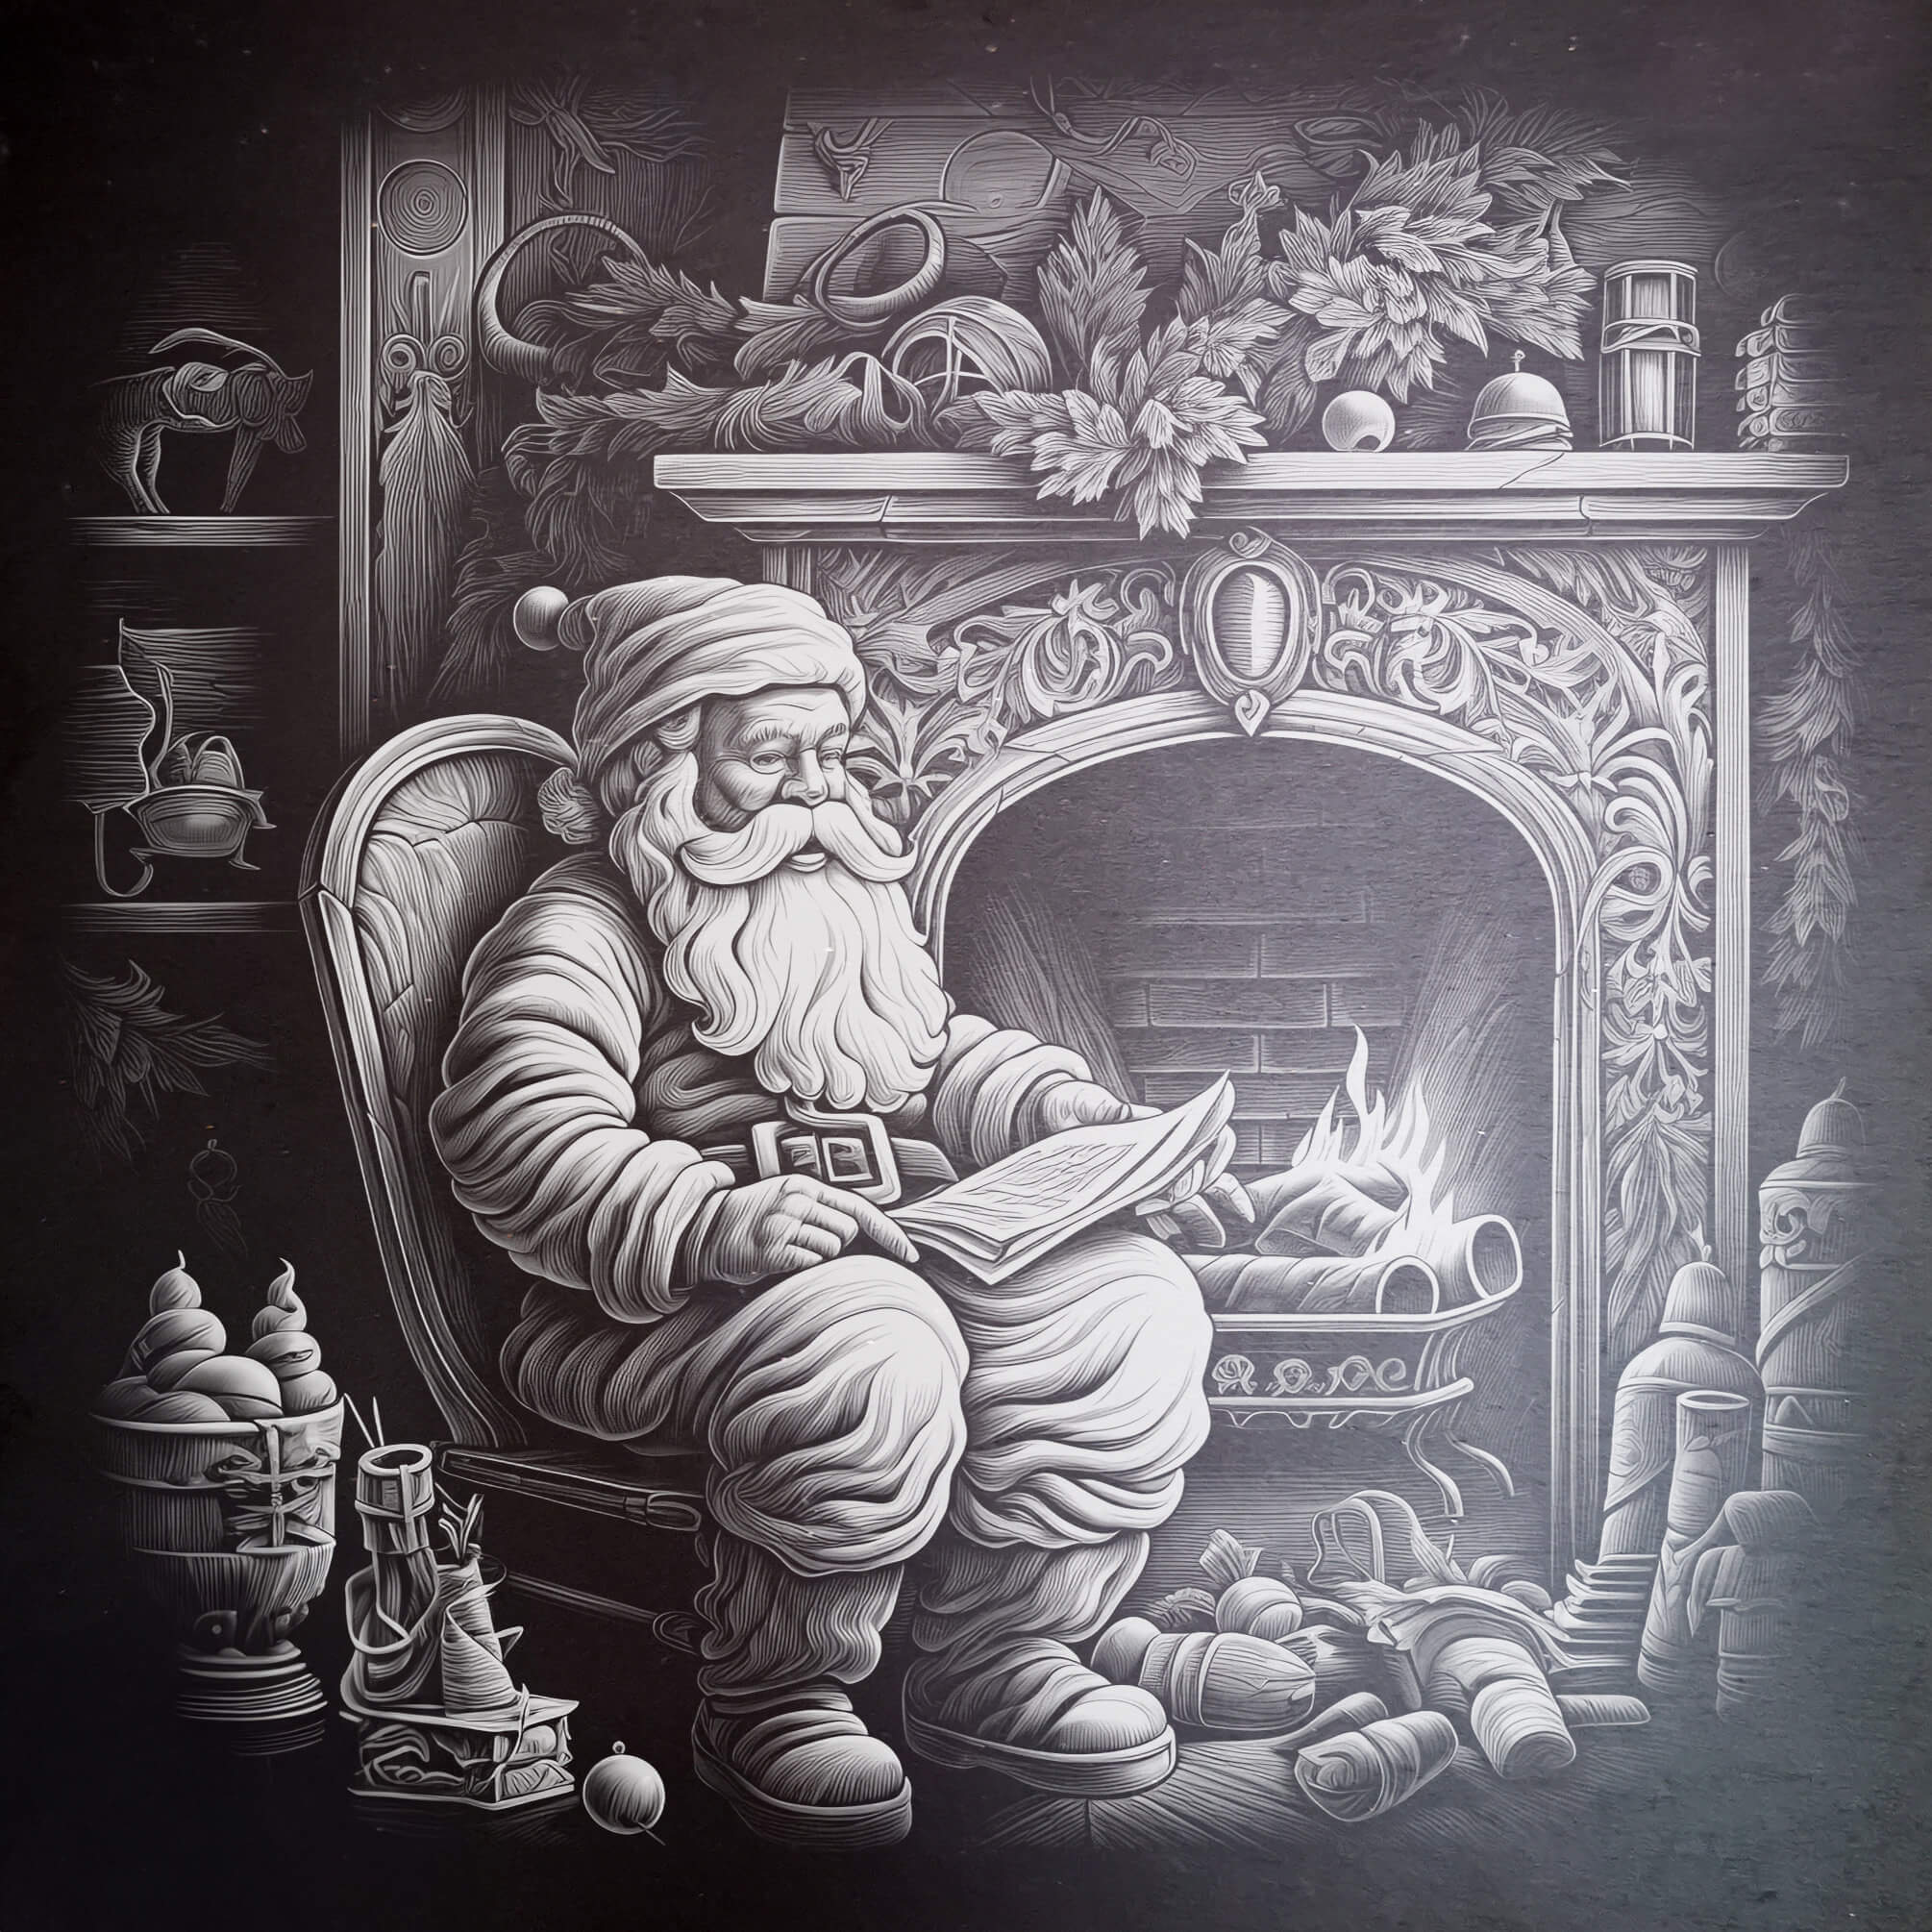 Arderzie - Resting at Santa's Fireplace